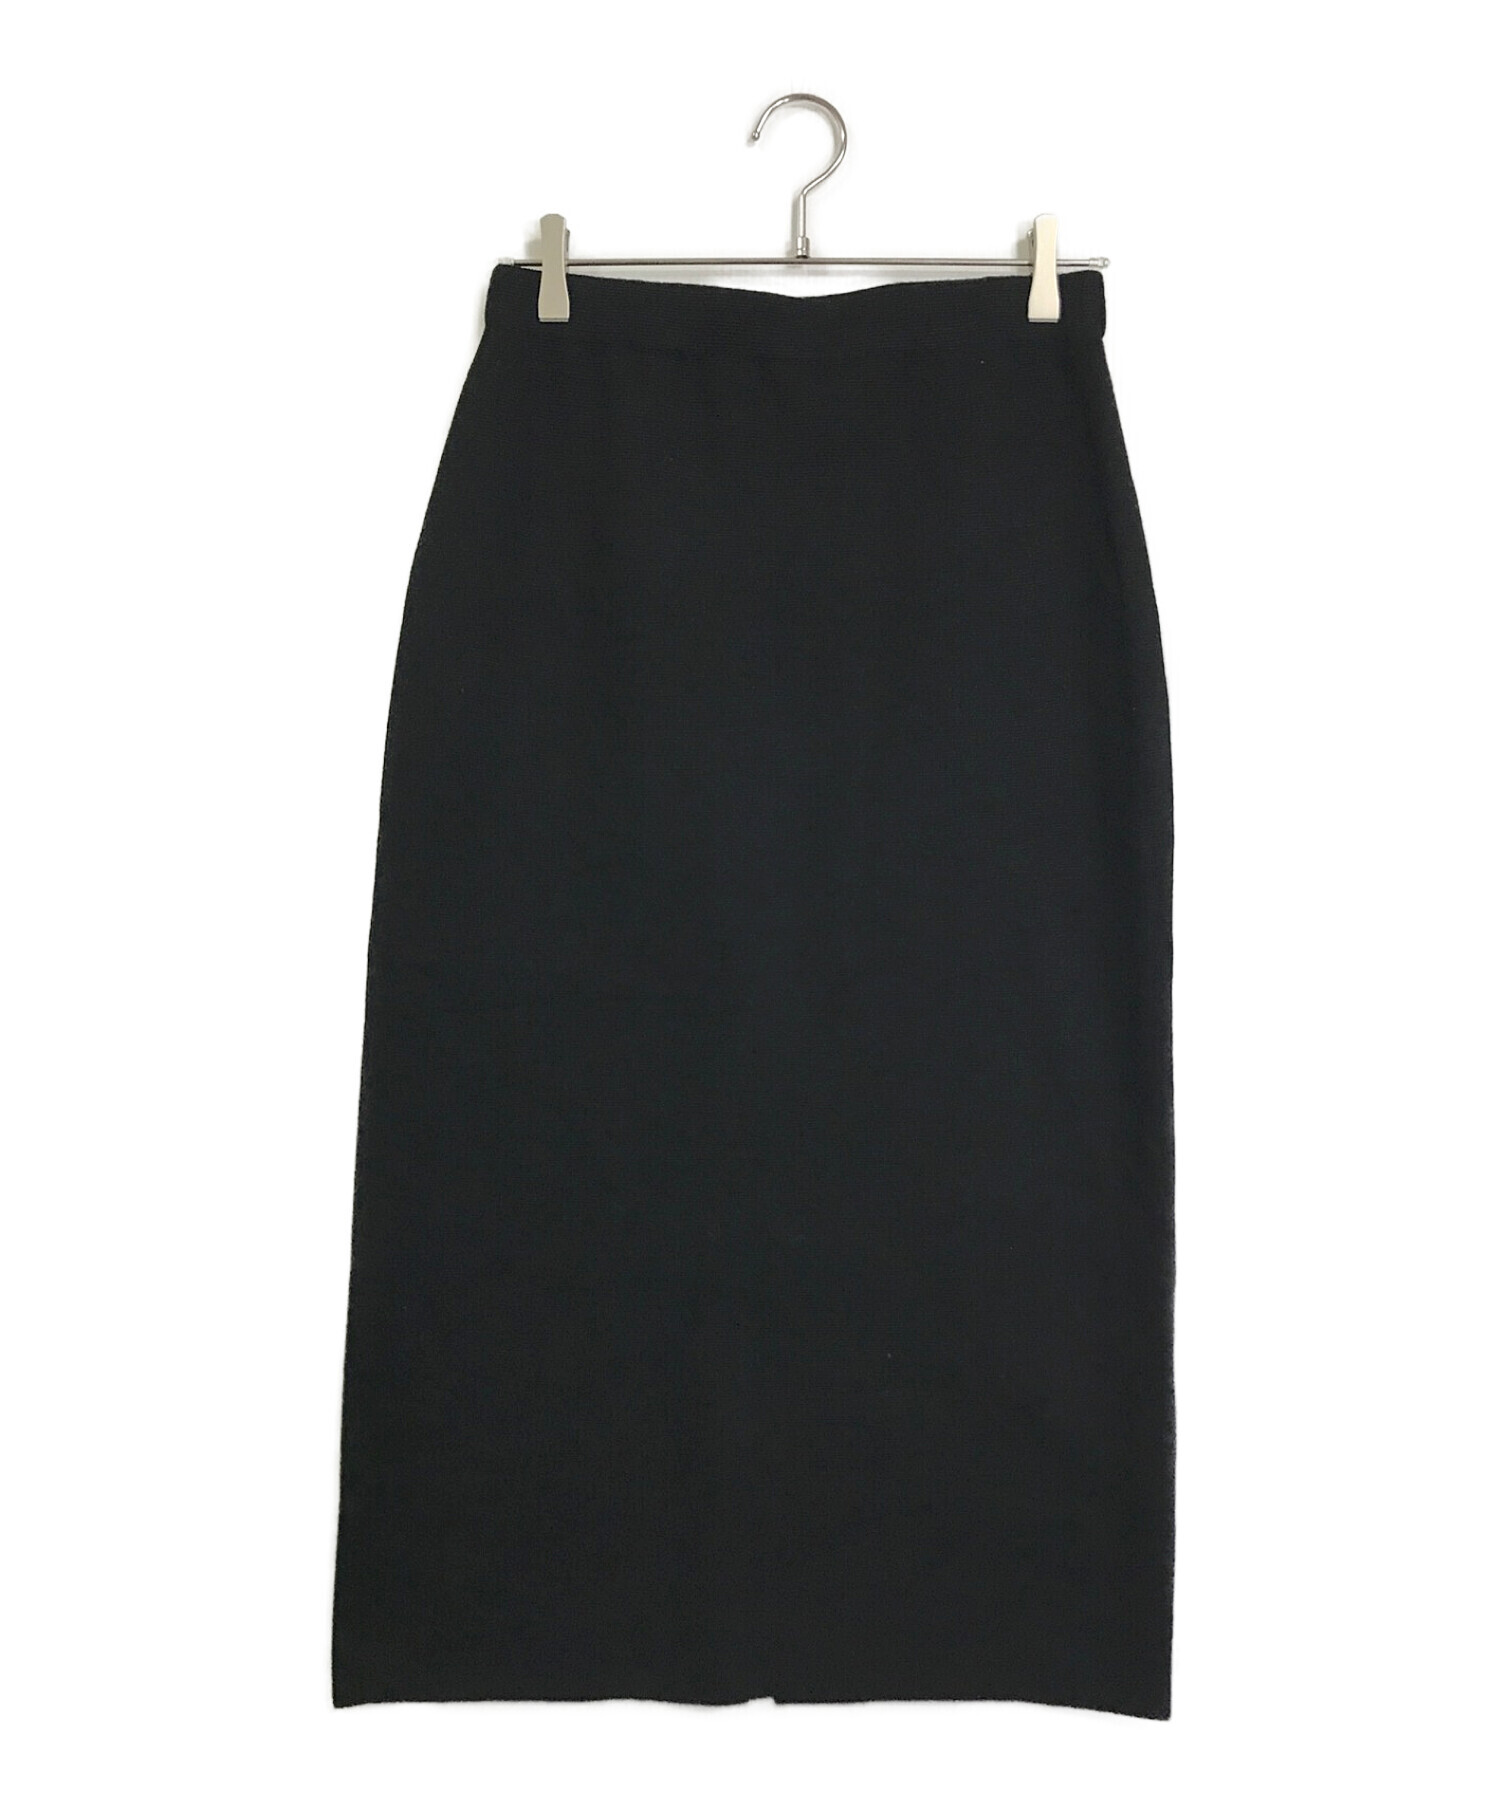 FRAMeWORK (フレームワーク) ミラノリブタイトスカート / ロングスカート ブラック サイズ:L